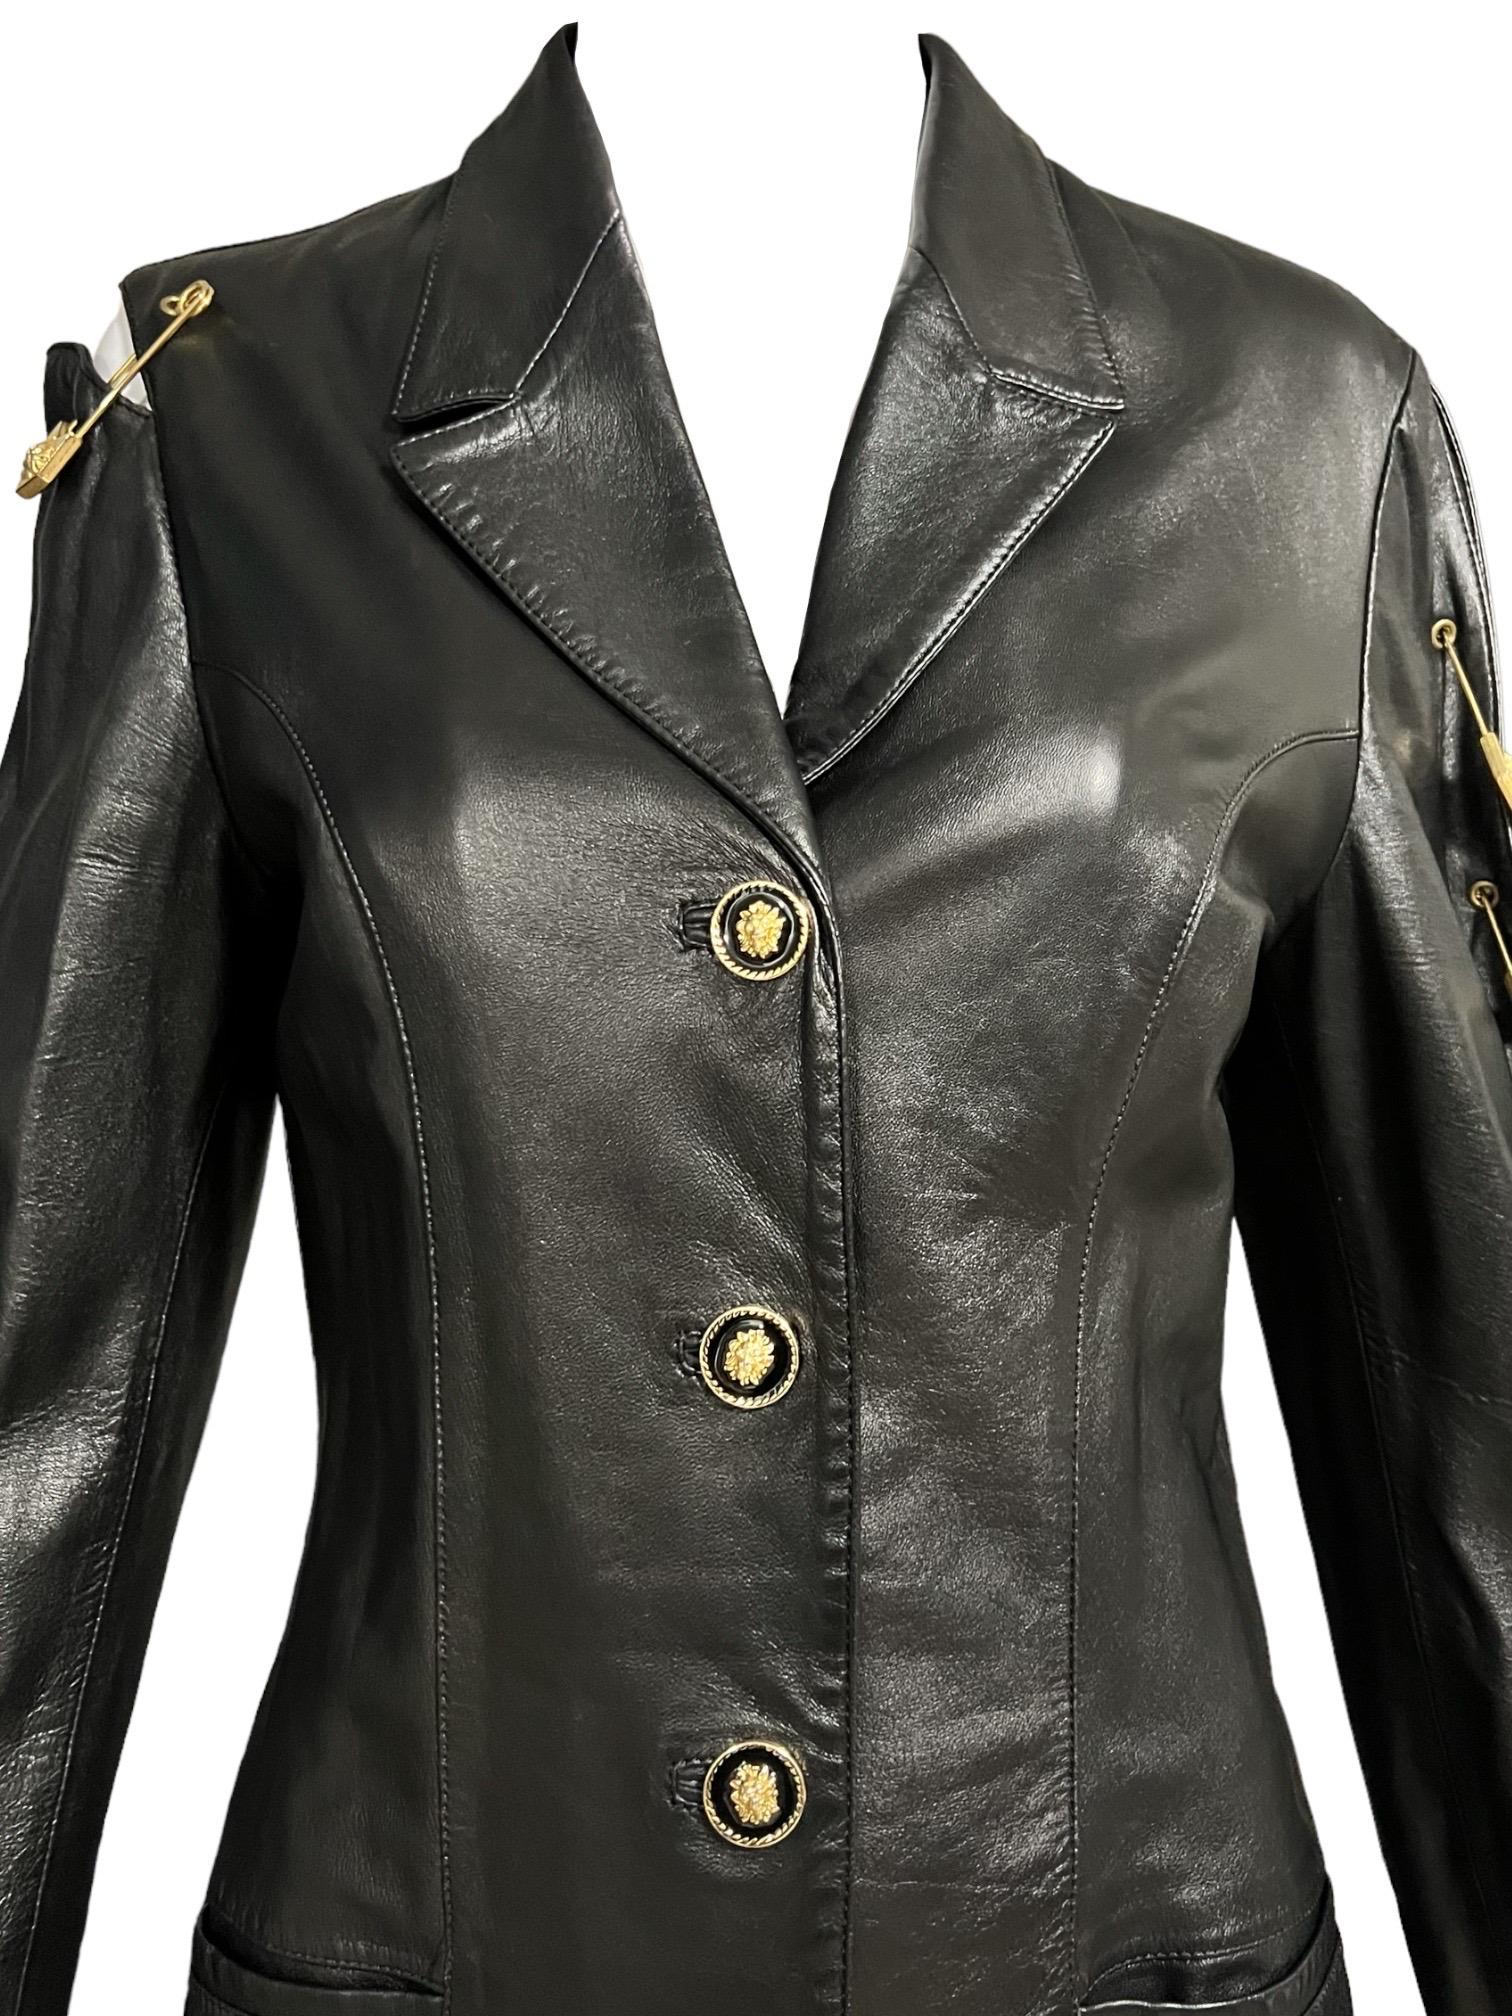 Gianni Versace Versus 90's Vintage Black Leather Safety Pin Jacket 1